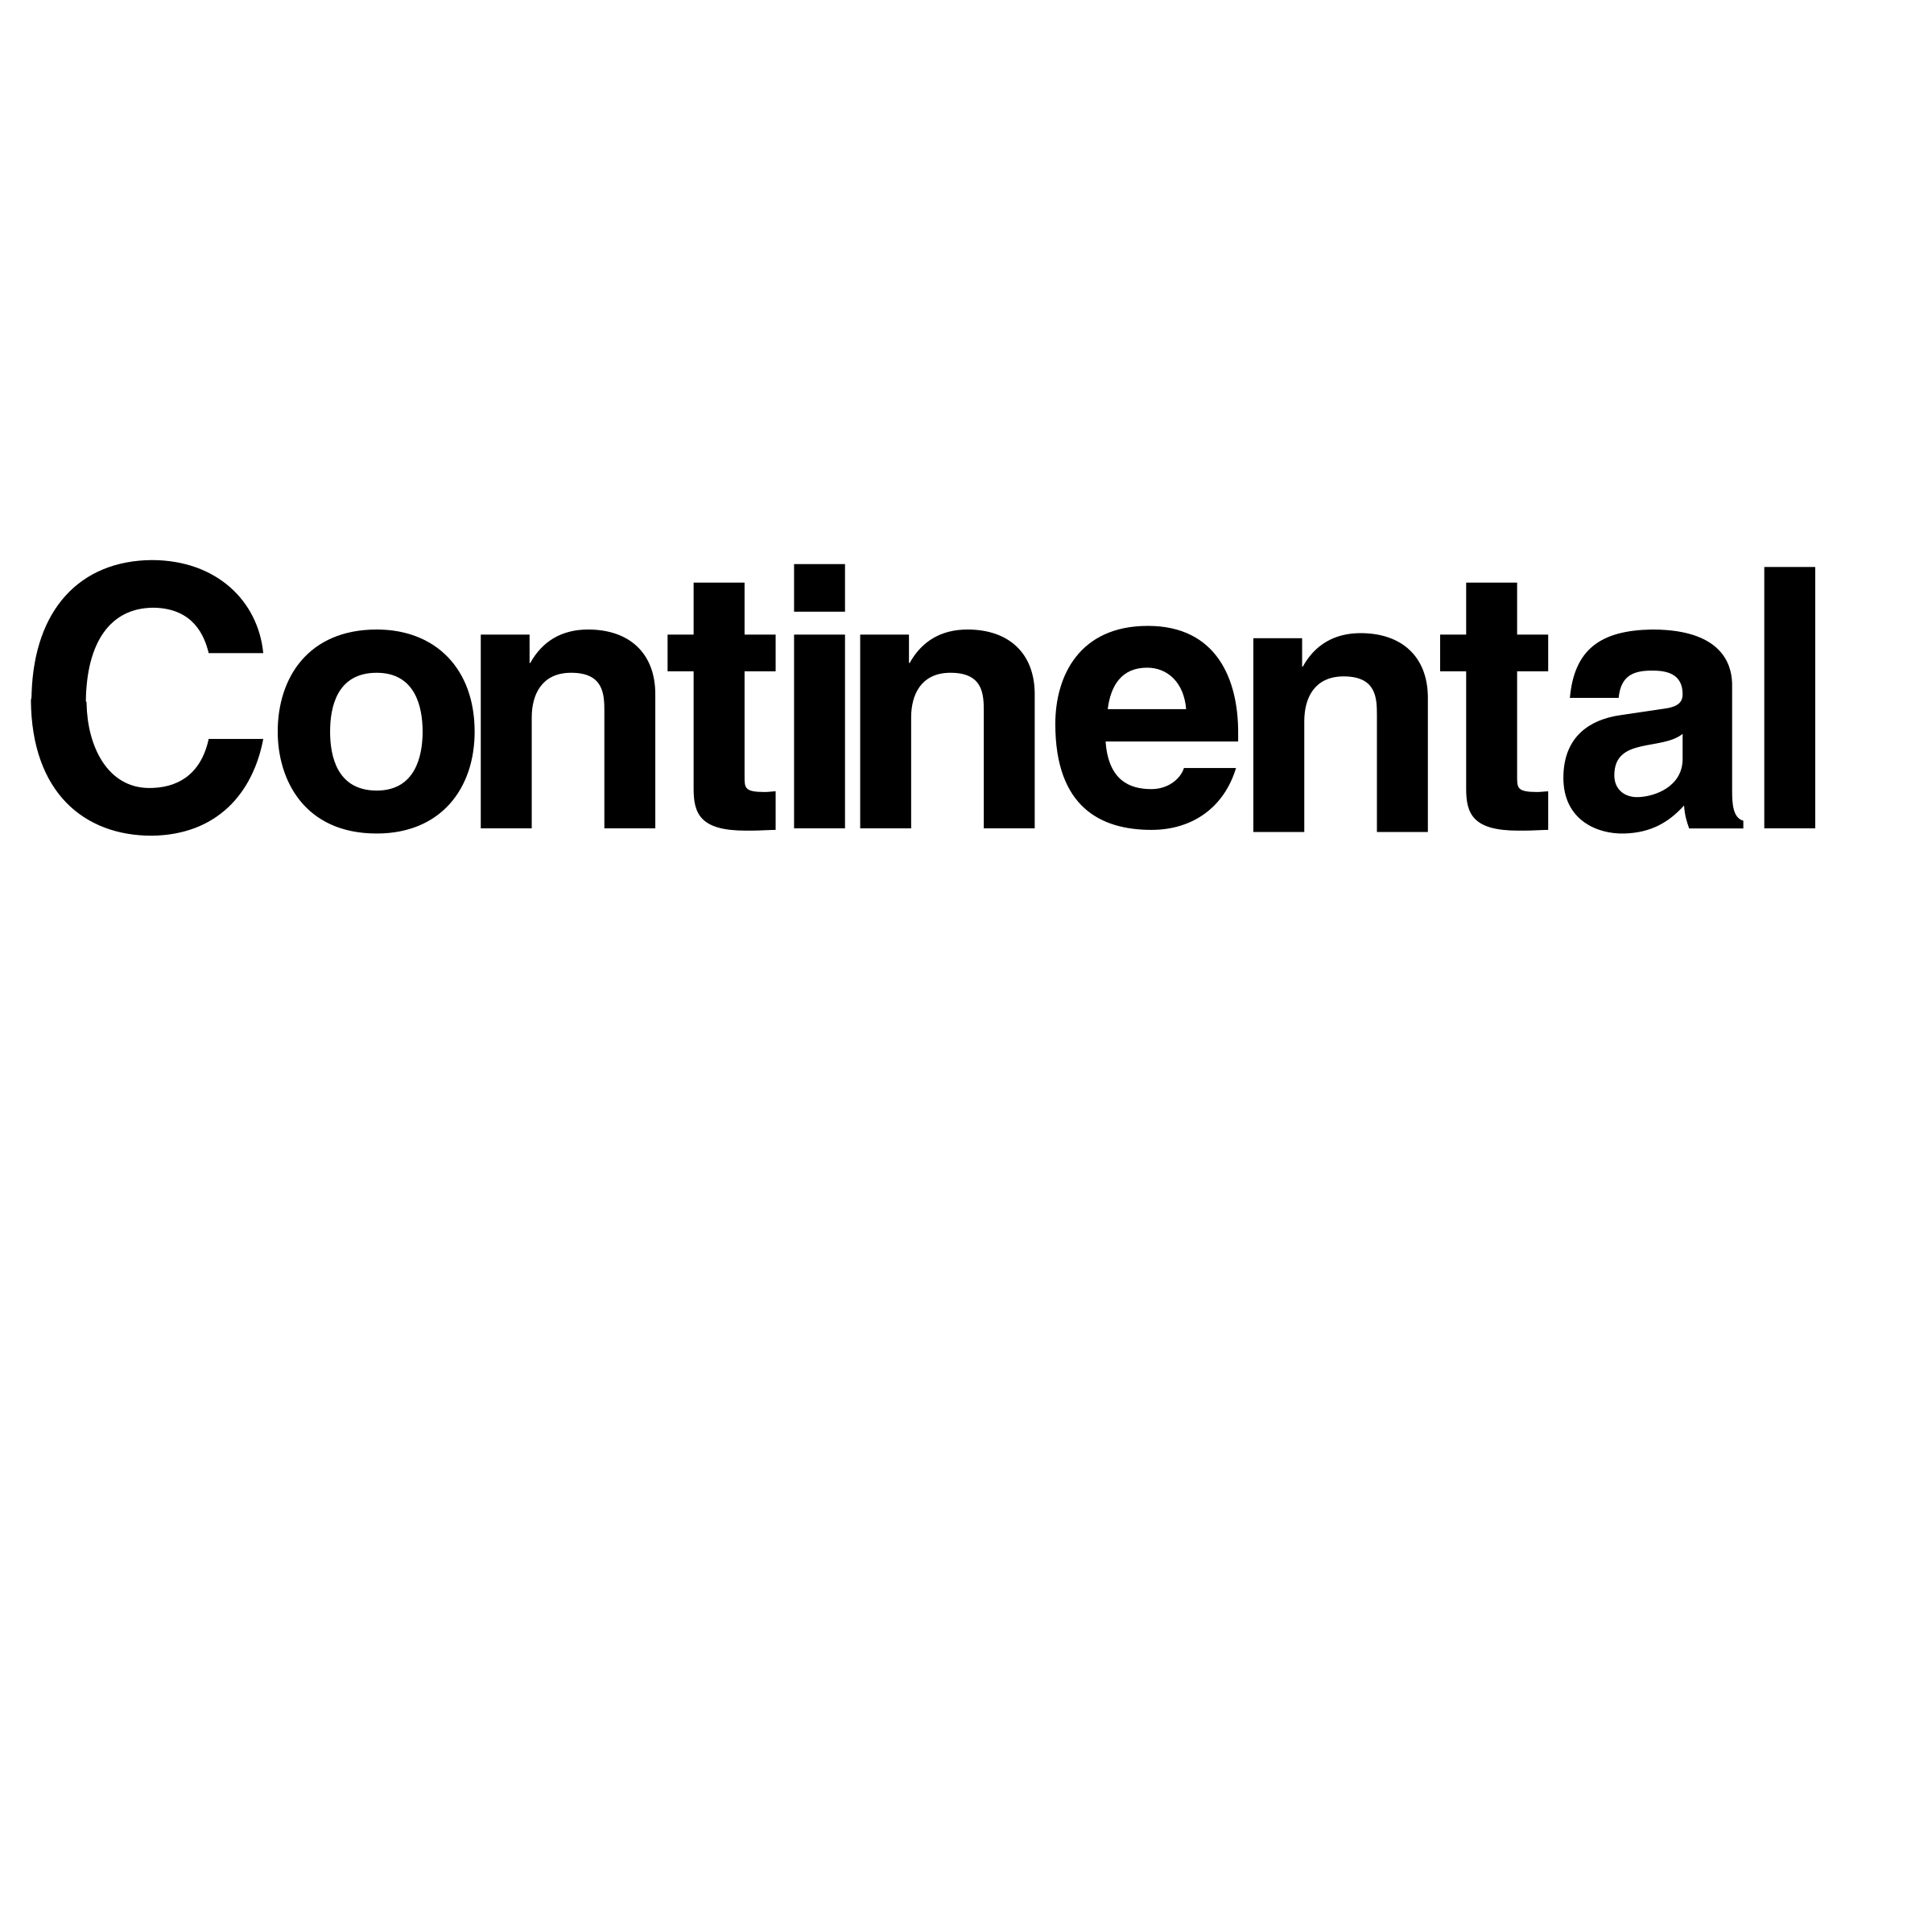 Continental Black Logo - Continental Lasers Logo PNG Transparent & SVG Vector - Freebie Supply